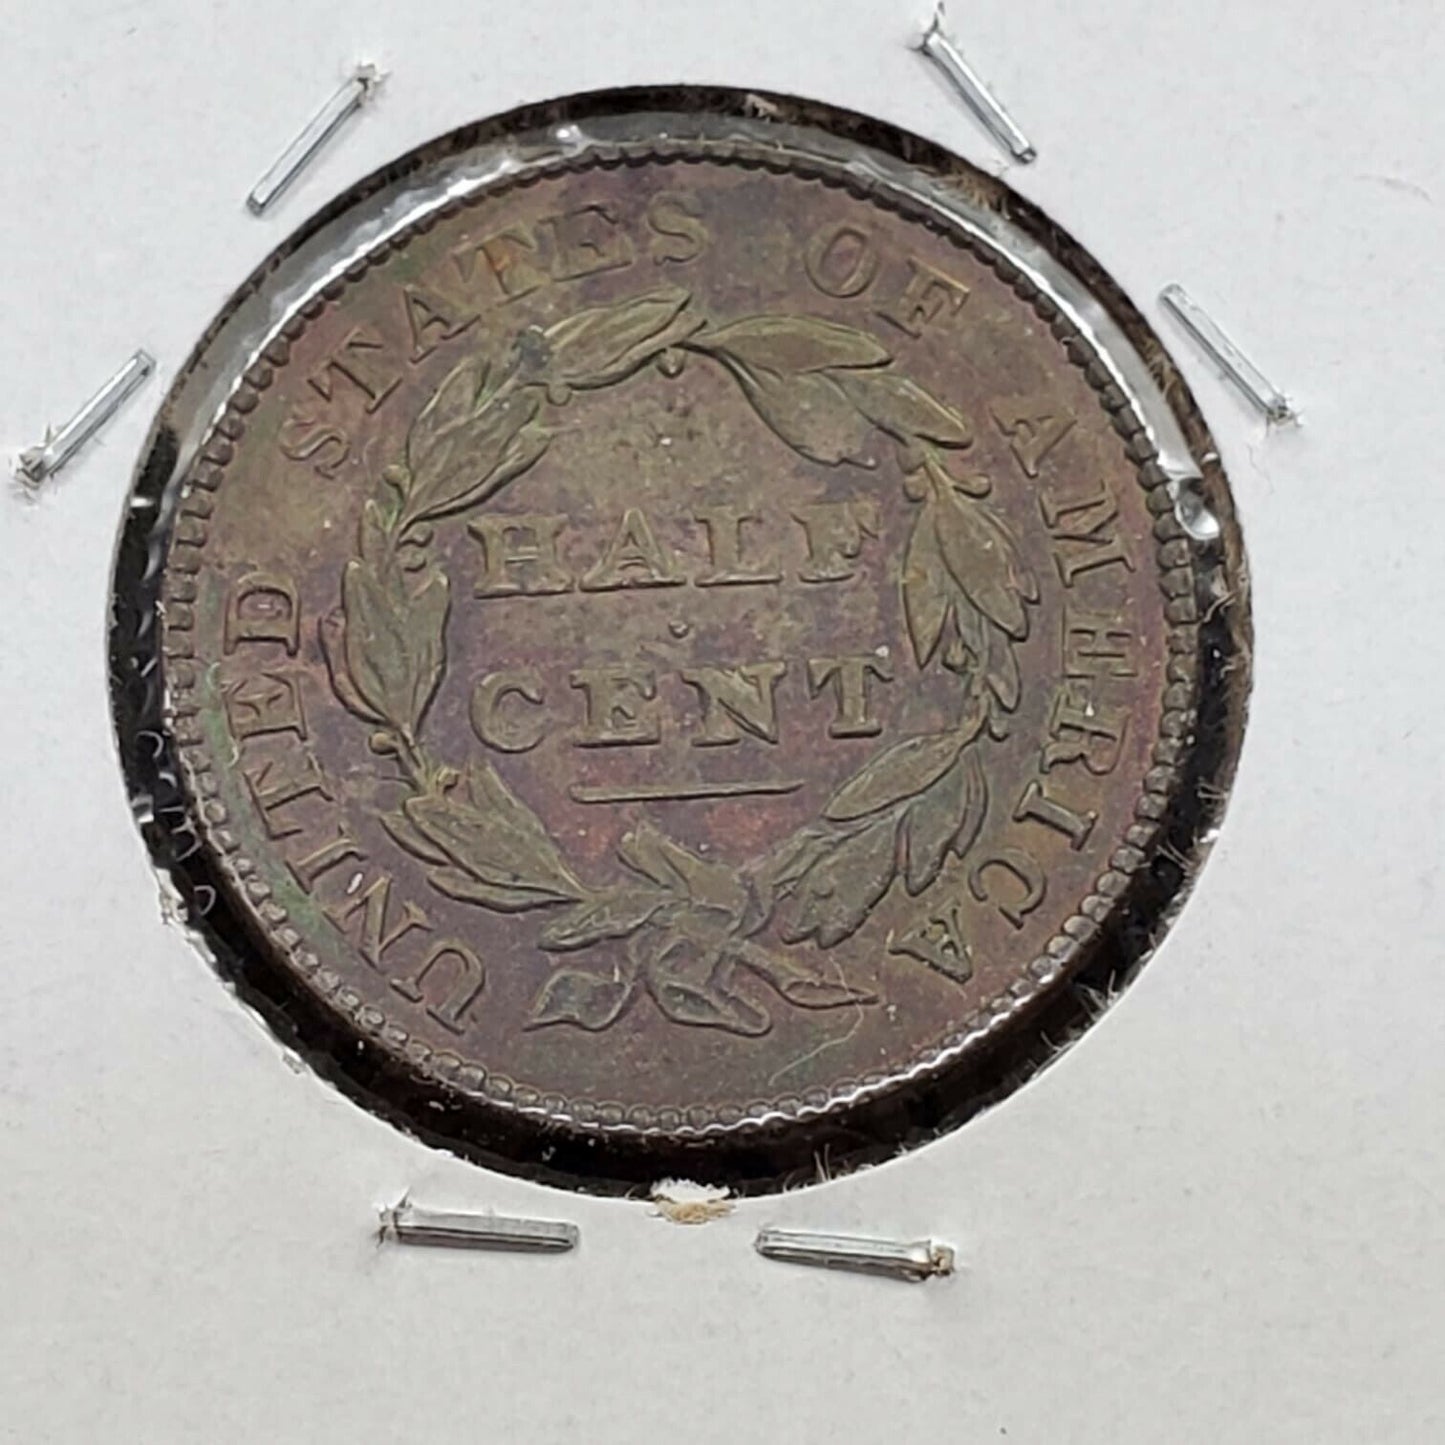 1828 Classic Head Half Cent Type Coin 13 Stars Variety Choice VF Very Fine Circ